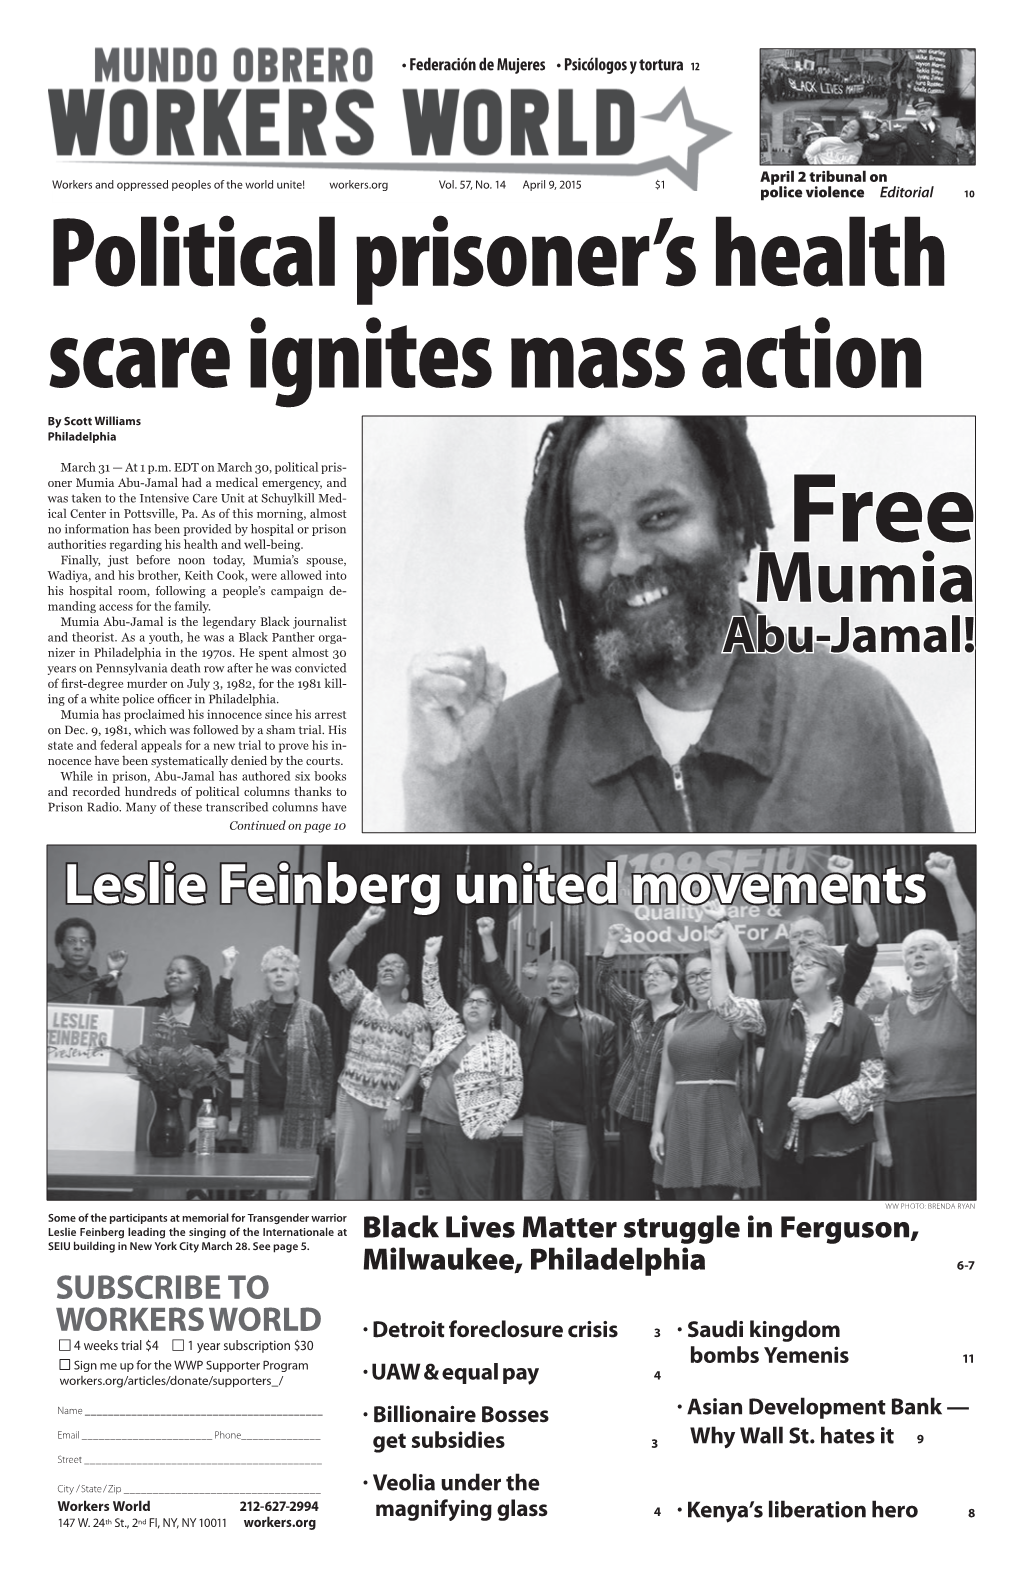 Leslie Feinberg United Movements